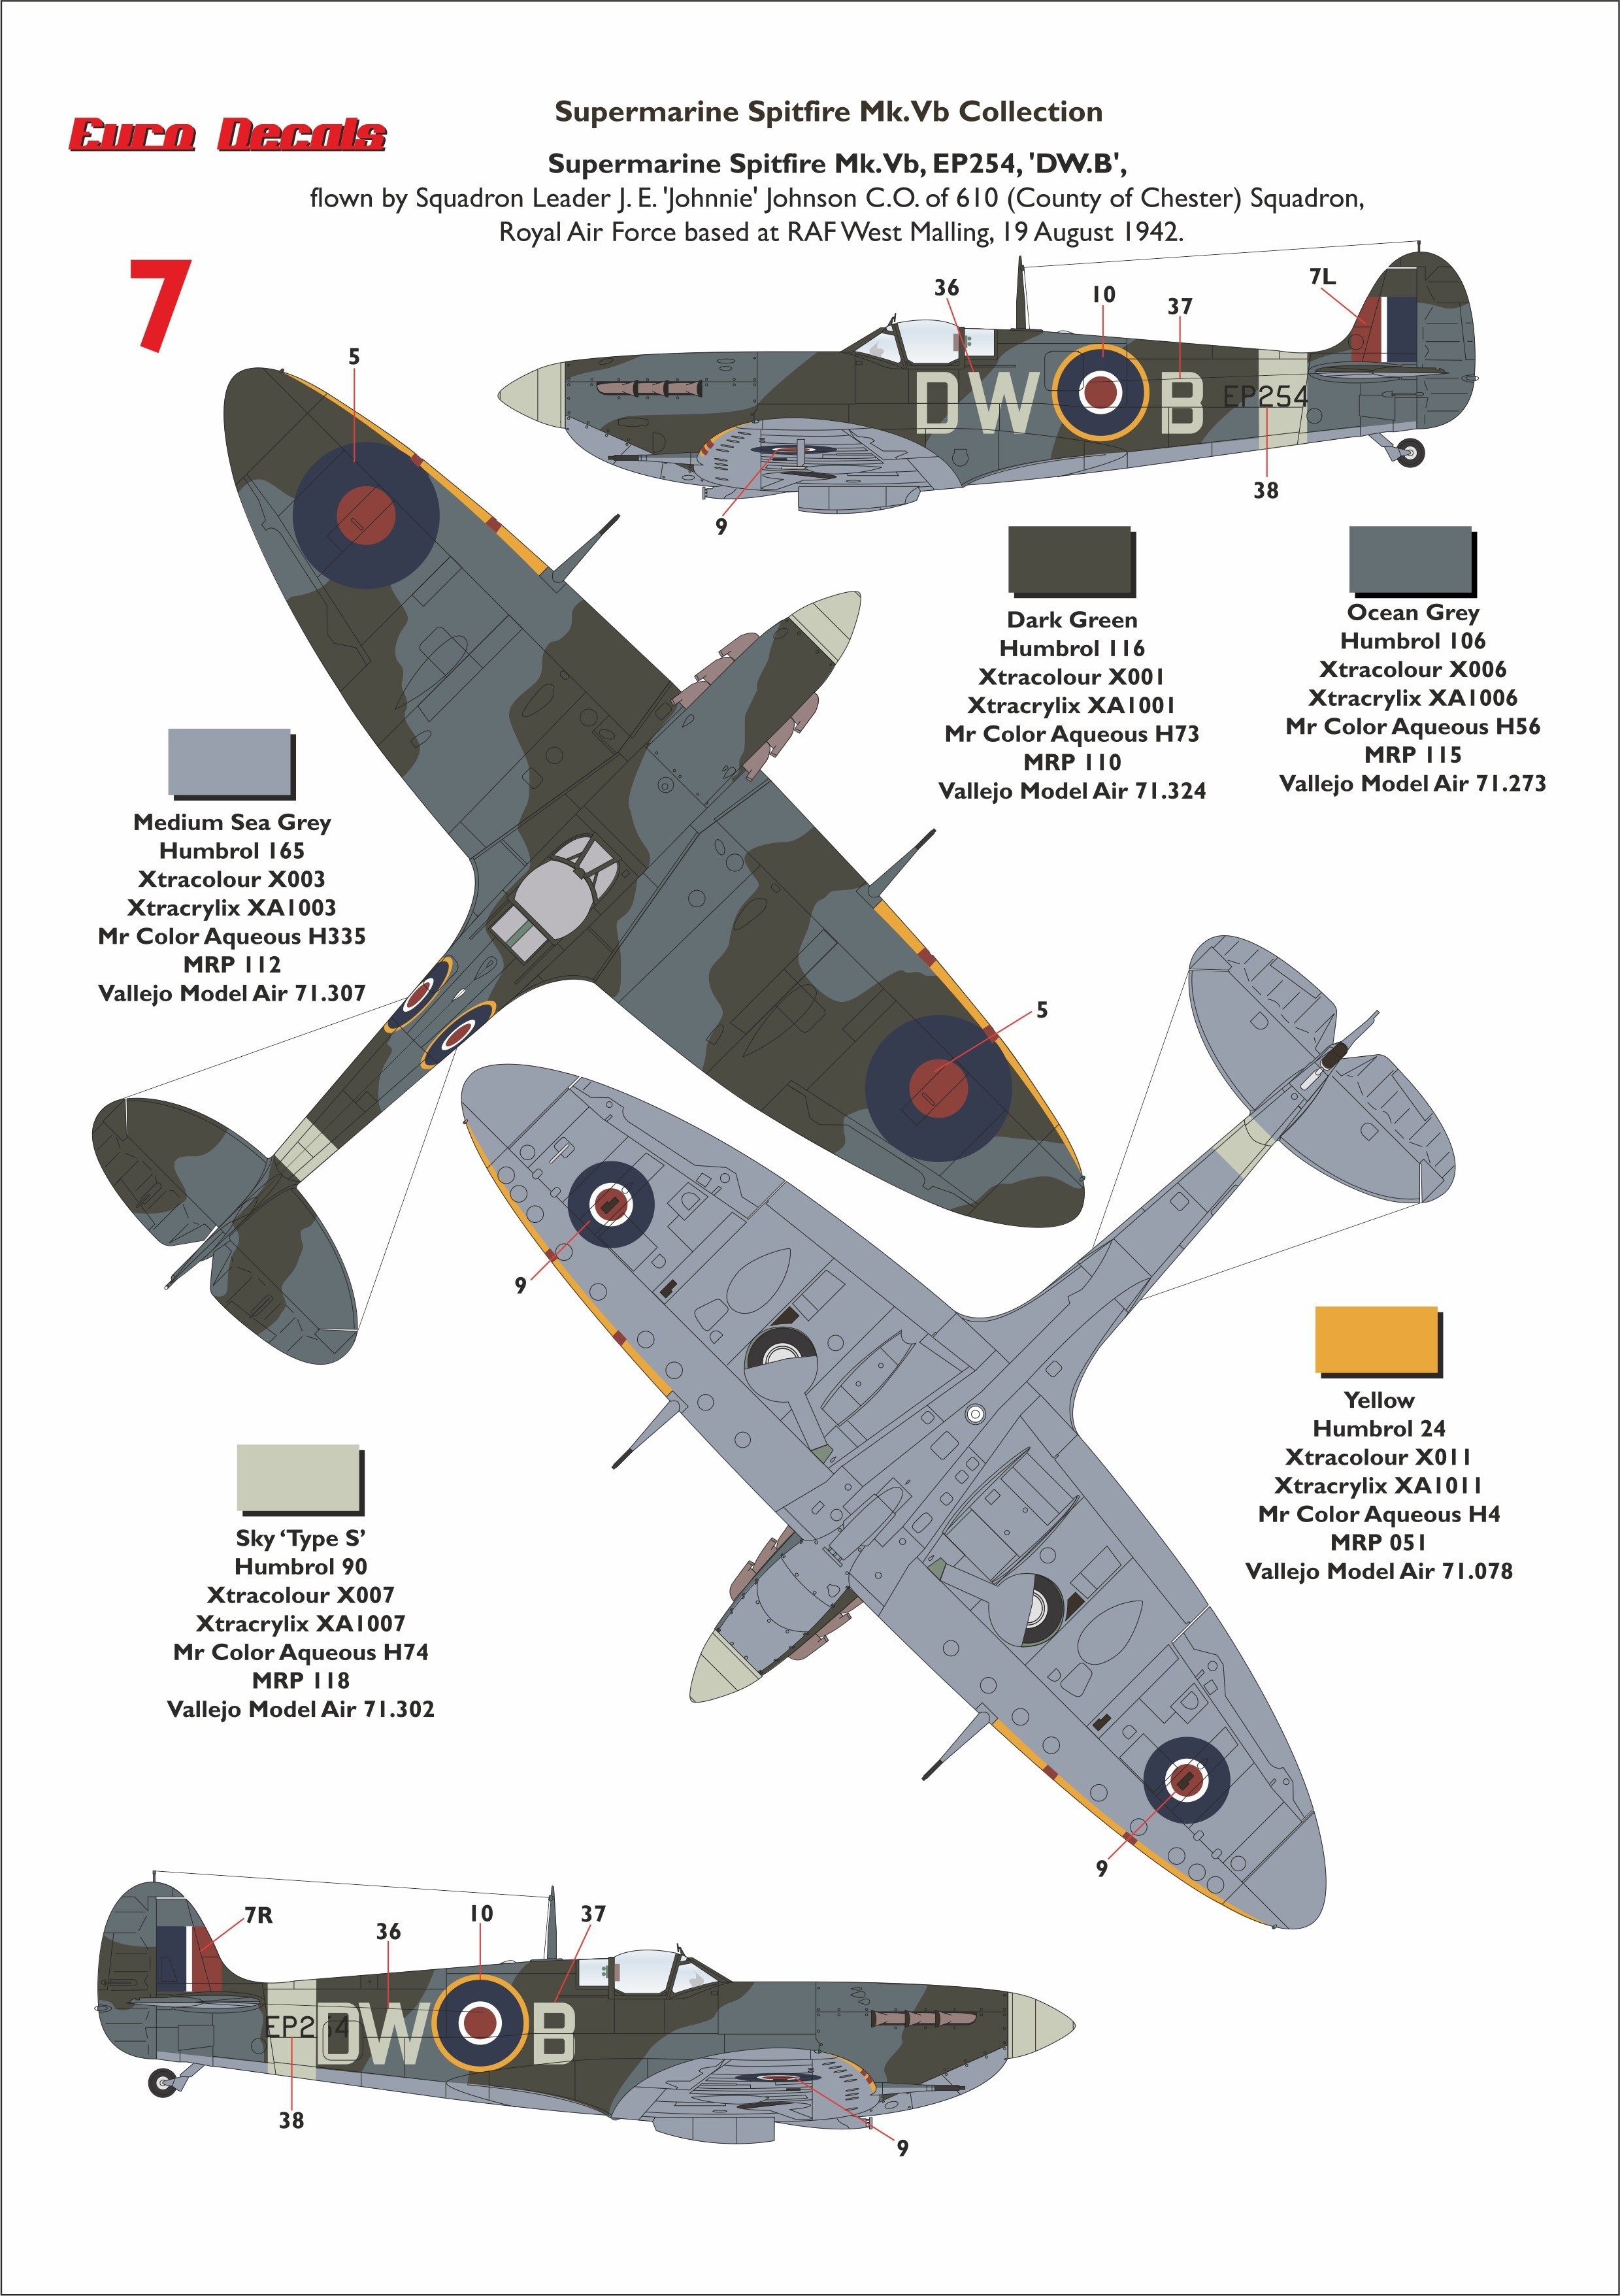 7: Spitfire Mk.Vb s/n EP254 DW-B flown by Sqn Ldr J. E. “Jonnie” Johnson, CO of 610 Sqn., RAF, 19th August 1942.